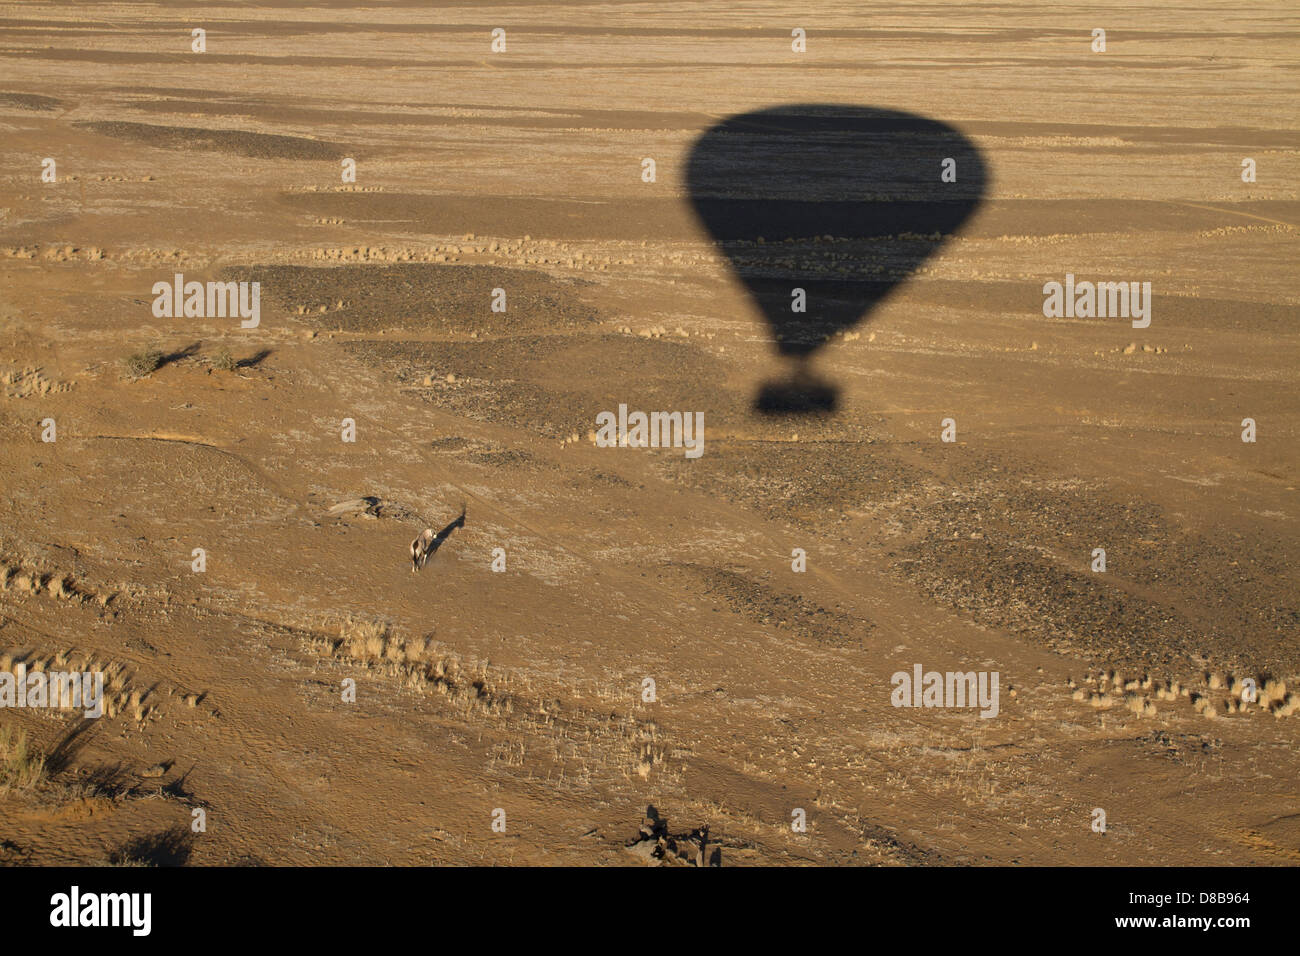 Shadow of a hot air balloon, Sossusvlei, Namibia Stock Photo